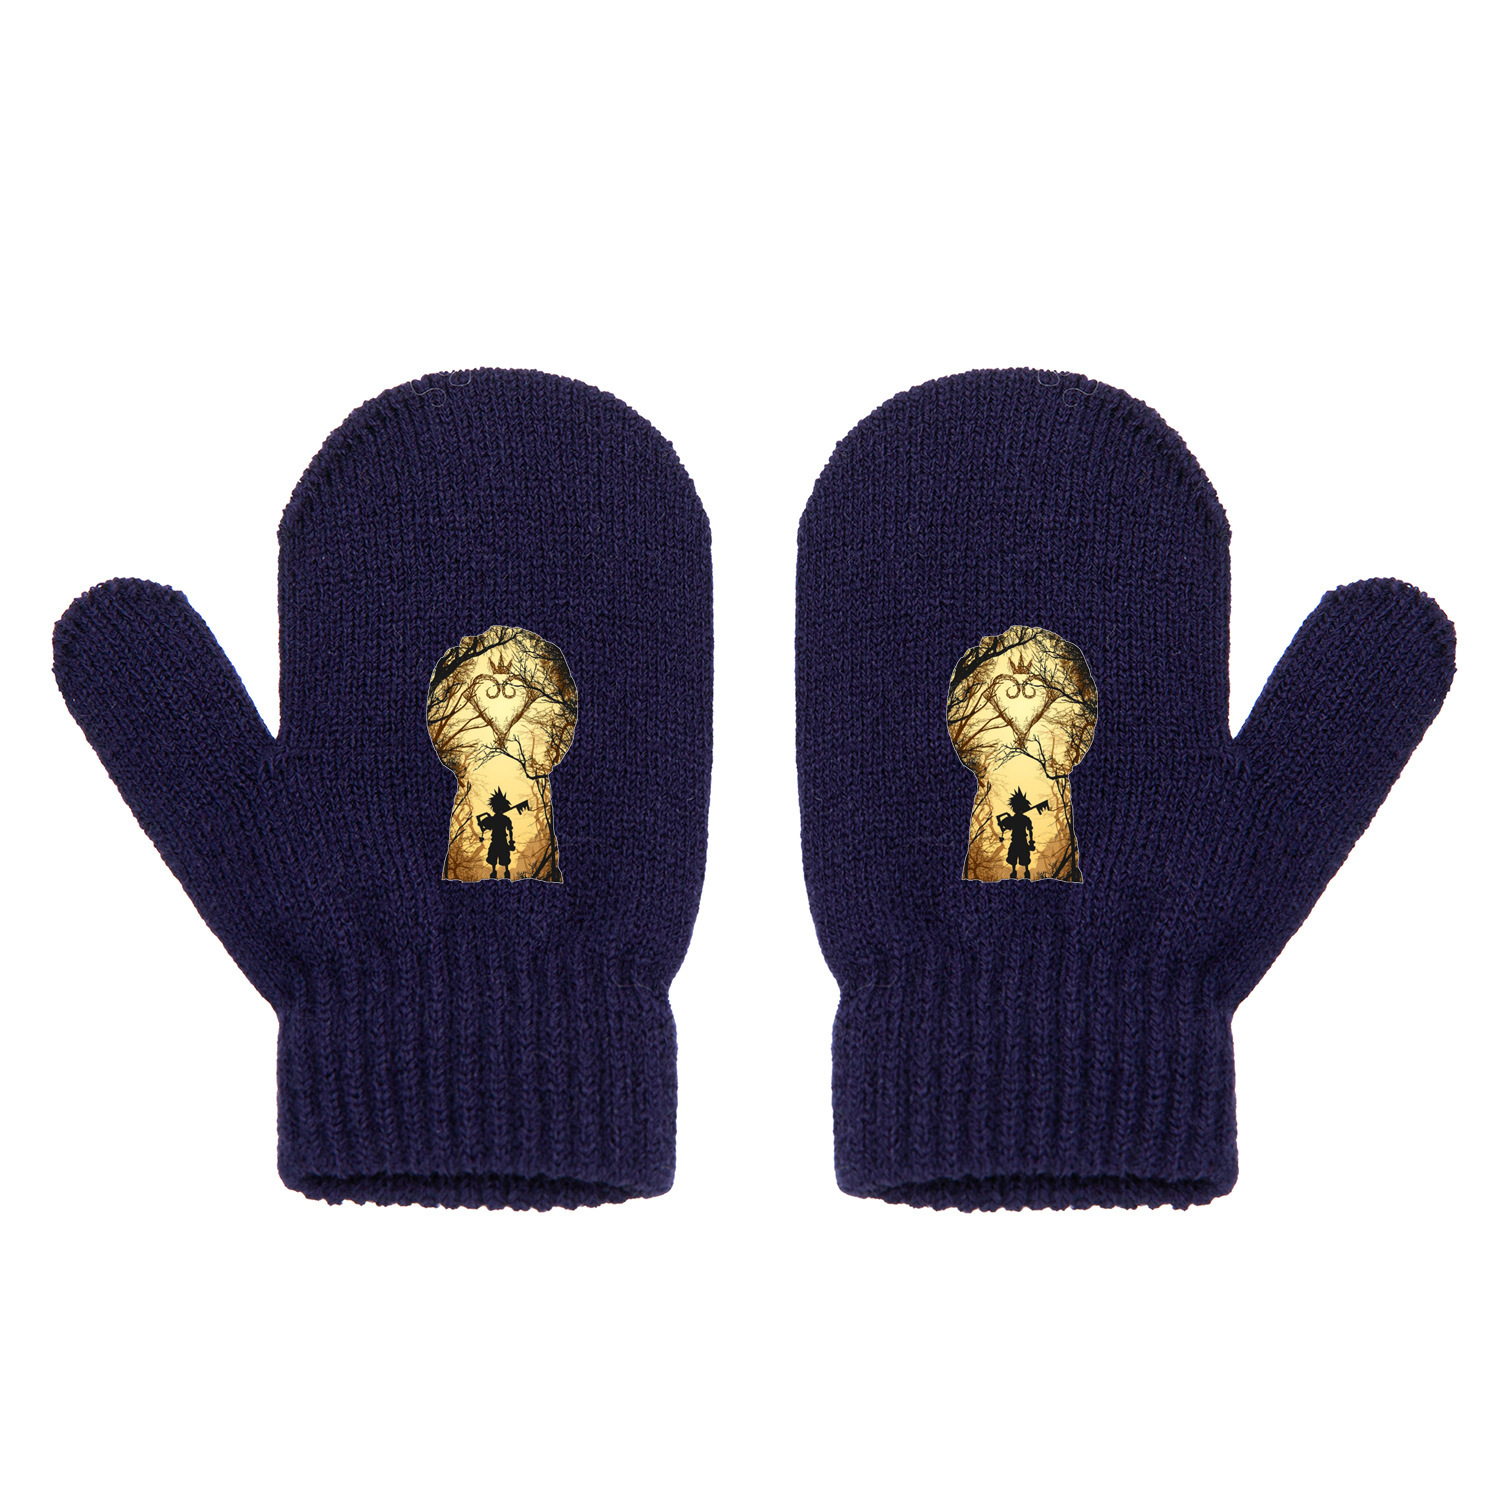 Kingdom Hearts anime glove